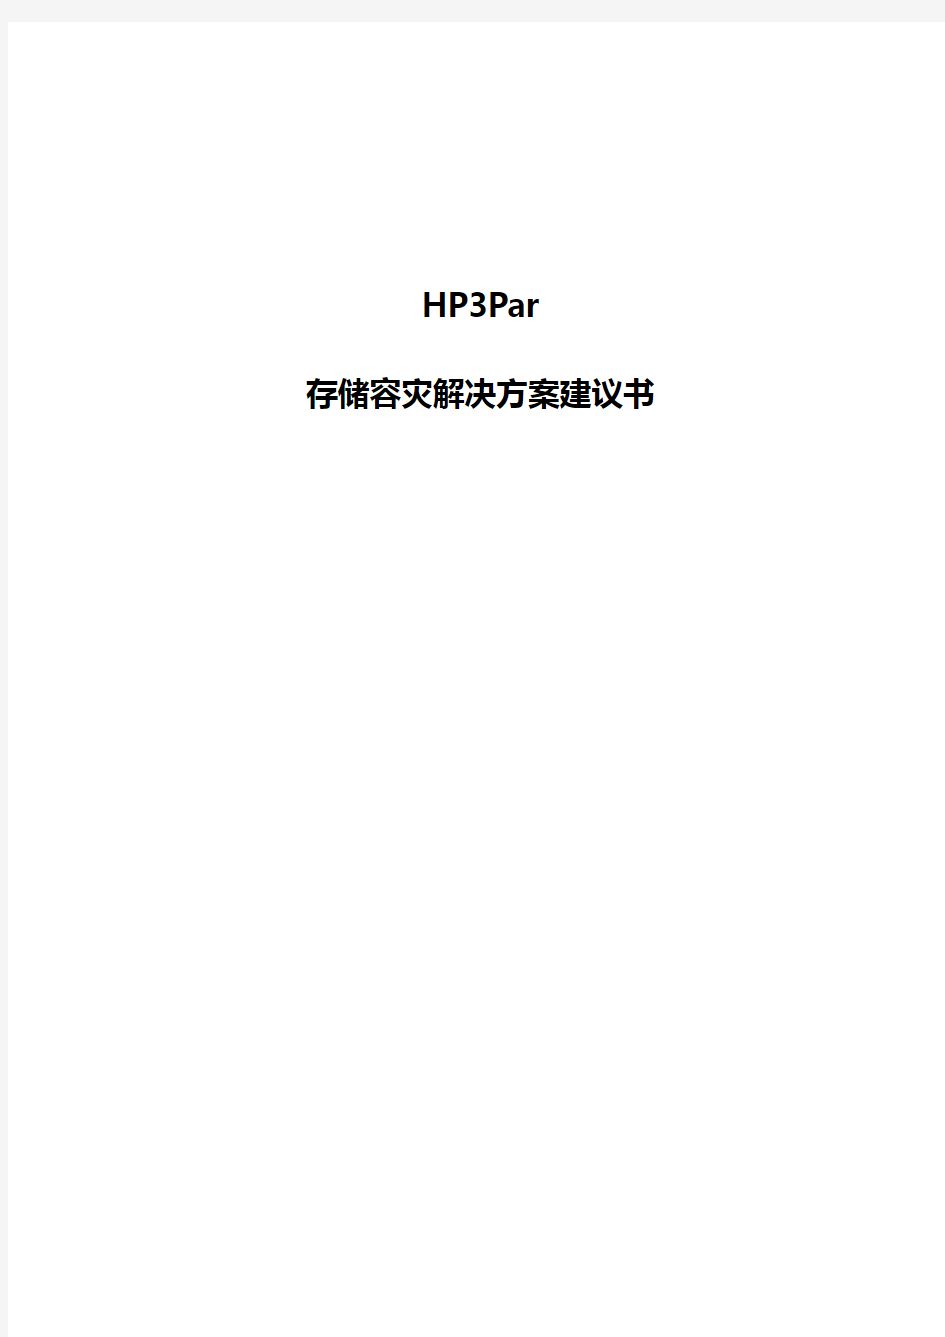 HPE-3Par存储容灾解决方案建议书